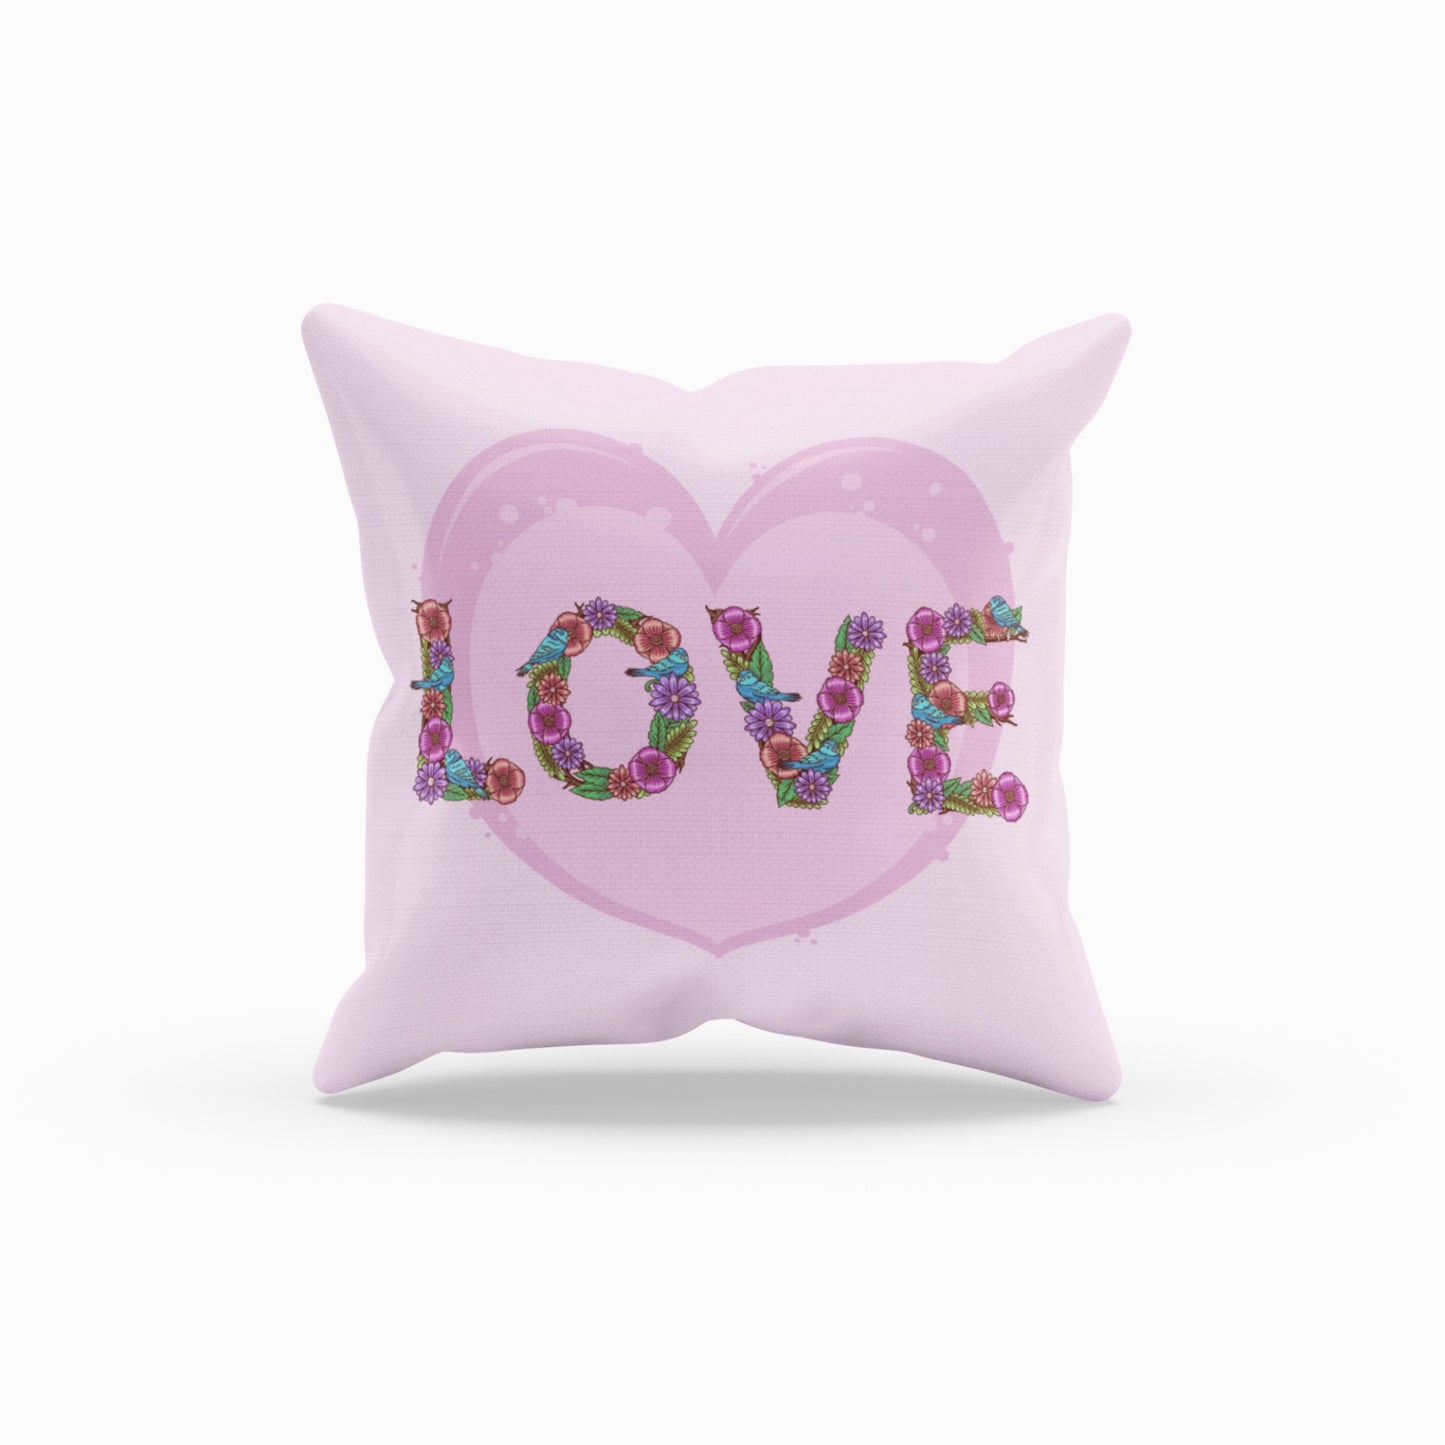 Whimsical Love Decor Pillow